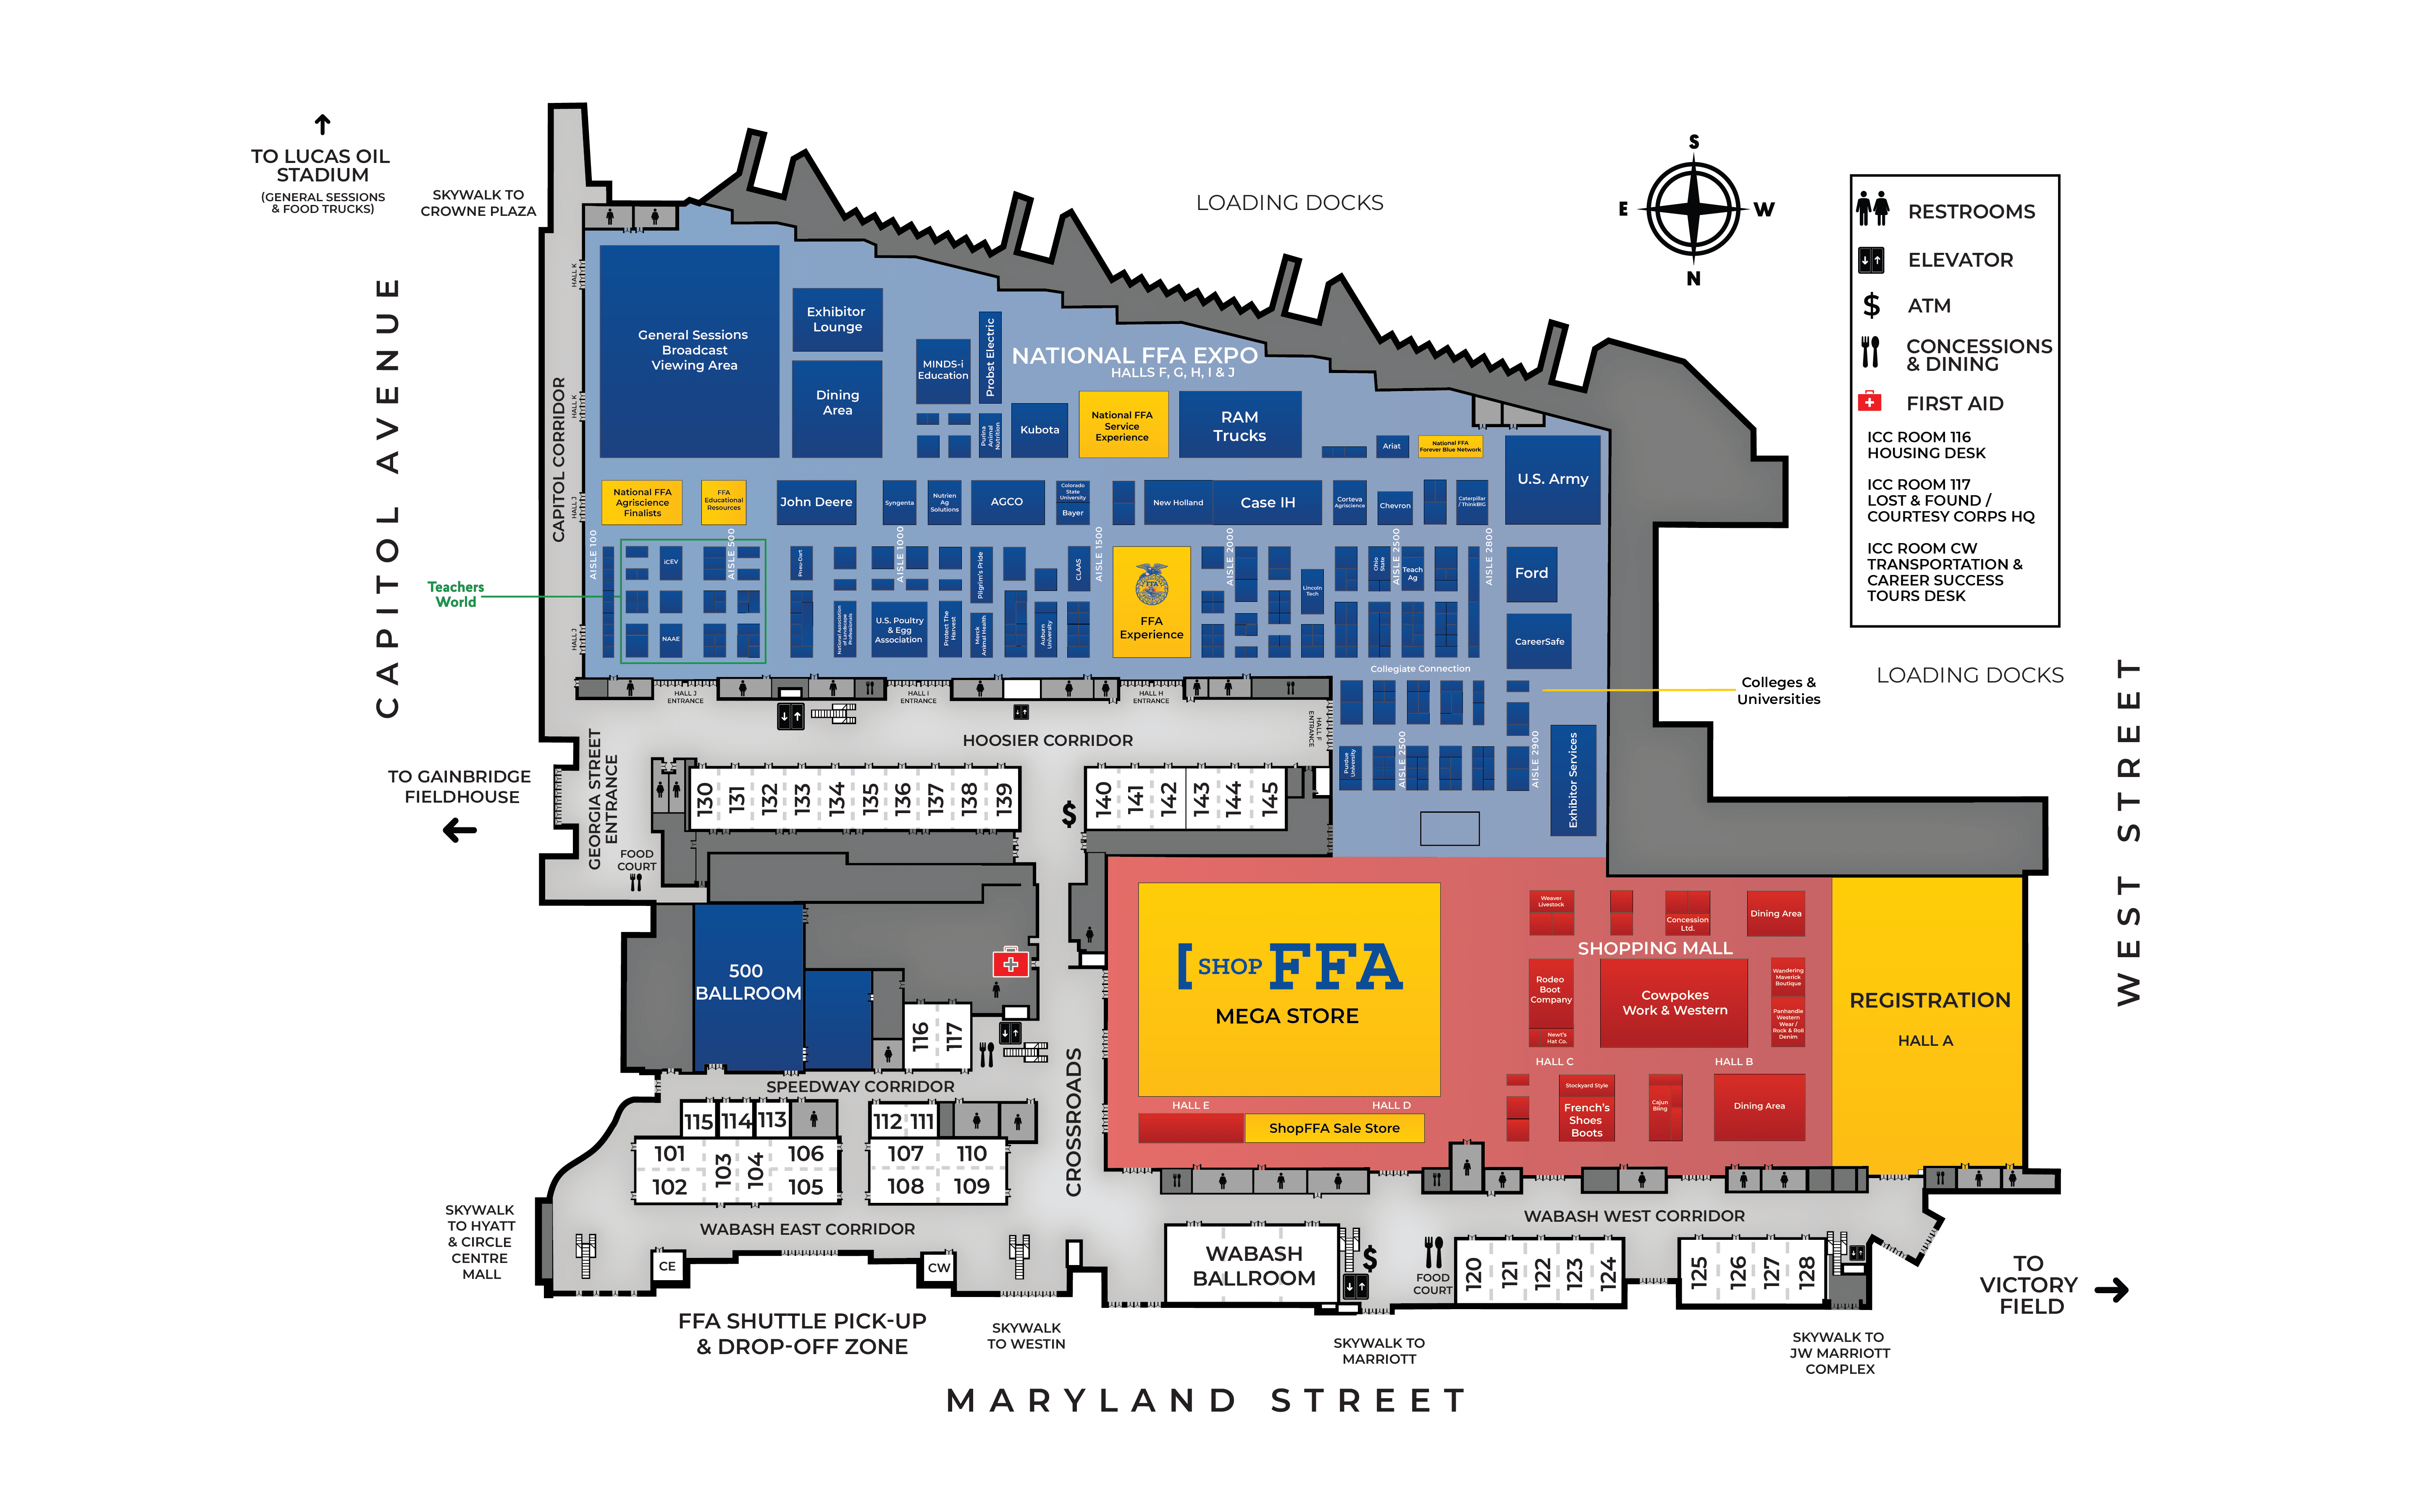 Indiana Convention Center Exhibitor Floor Plan